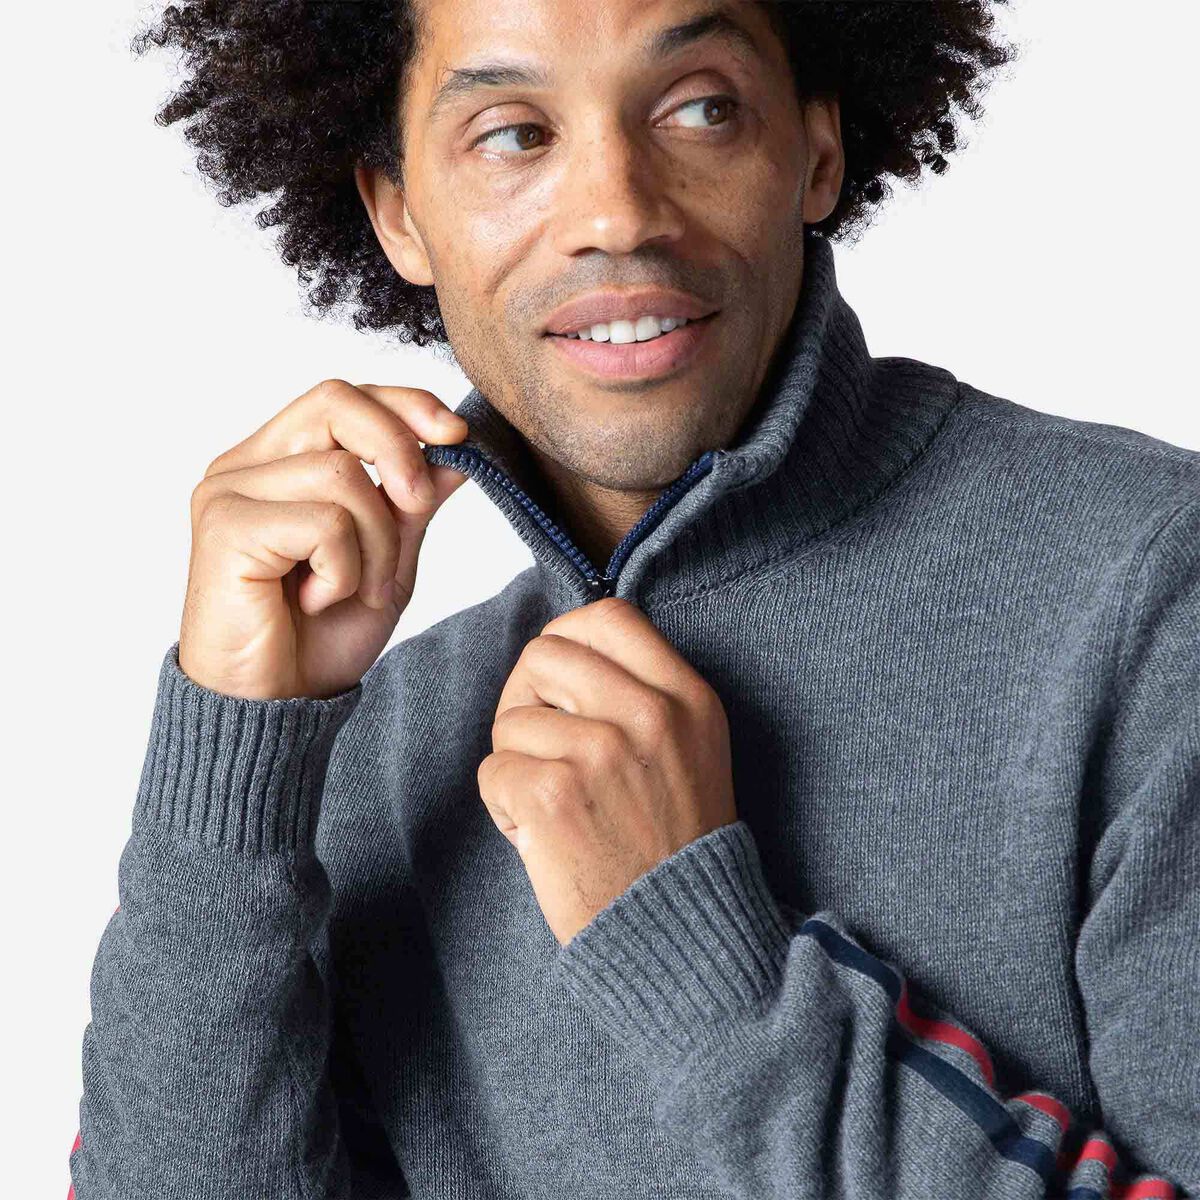 Rossignol Men's Signature Sleeve Knit Sweater grey